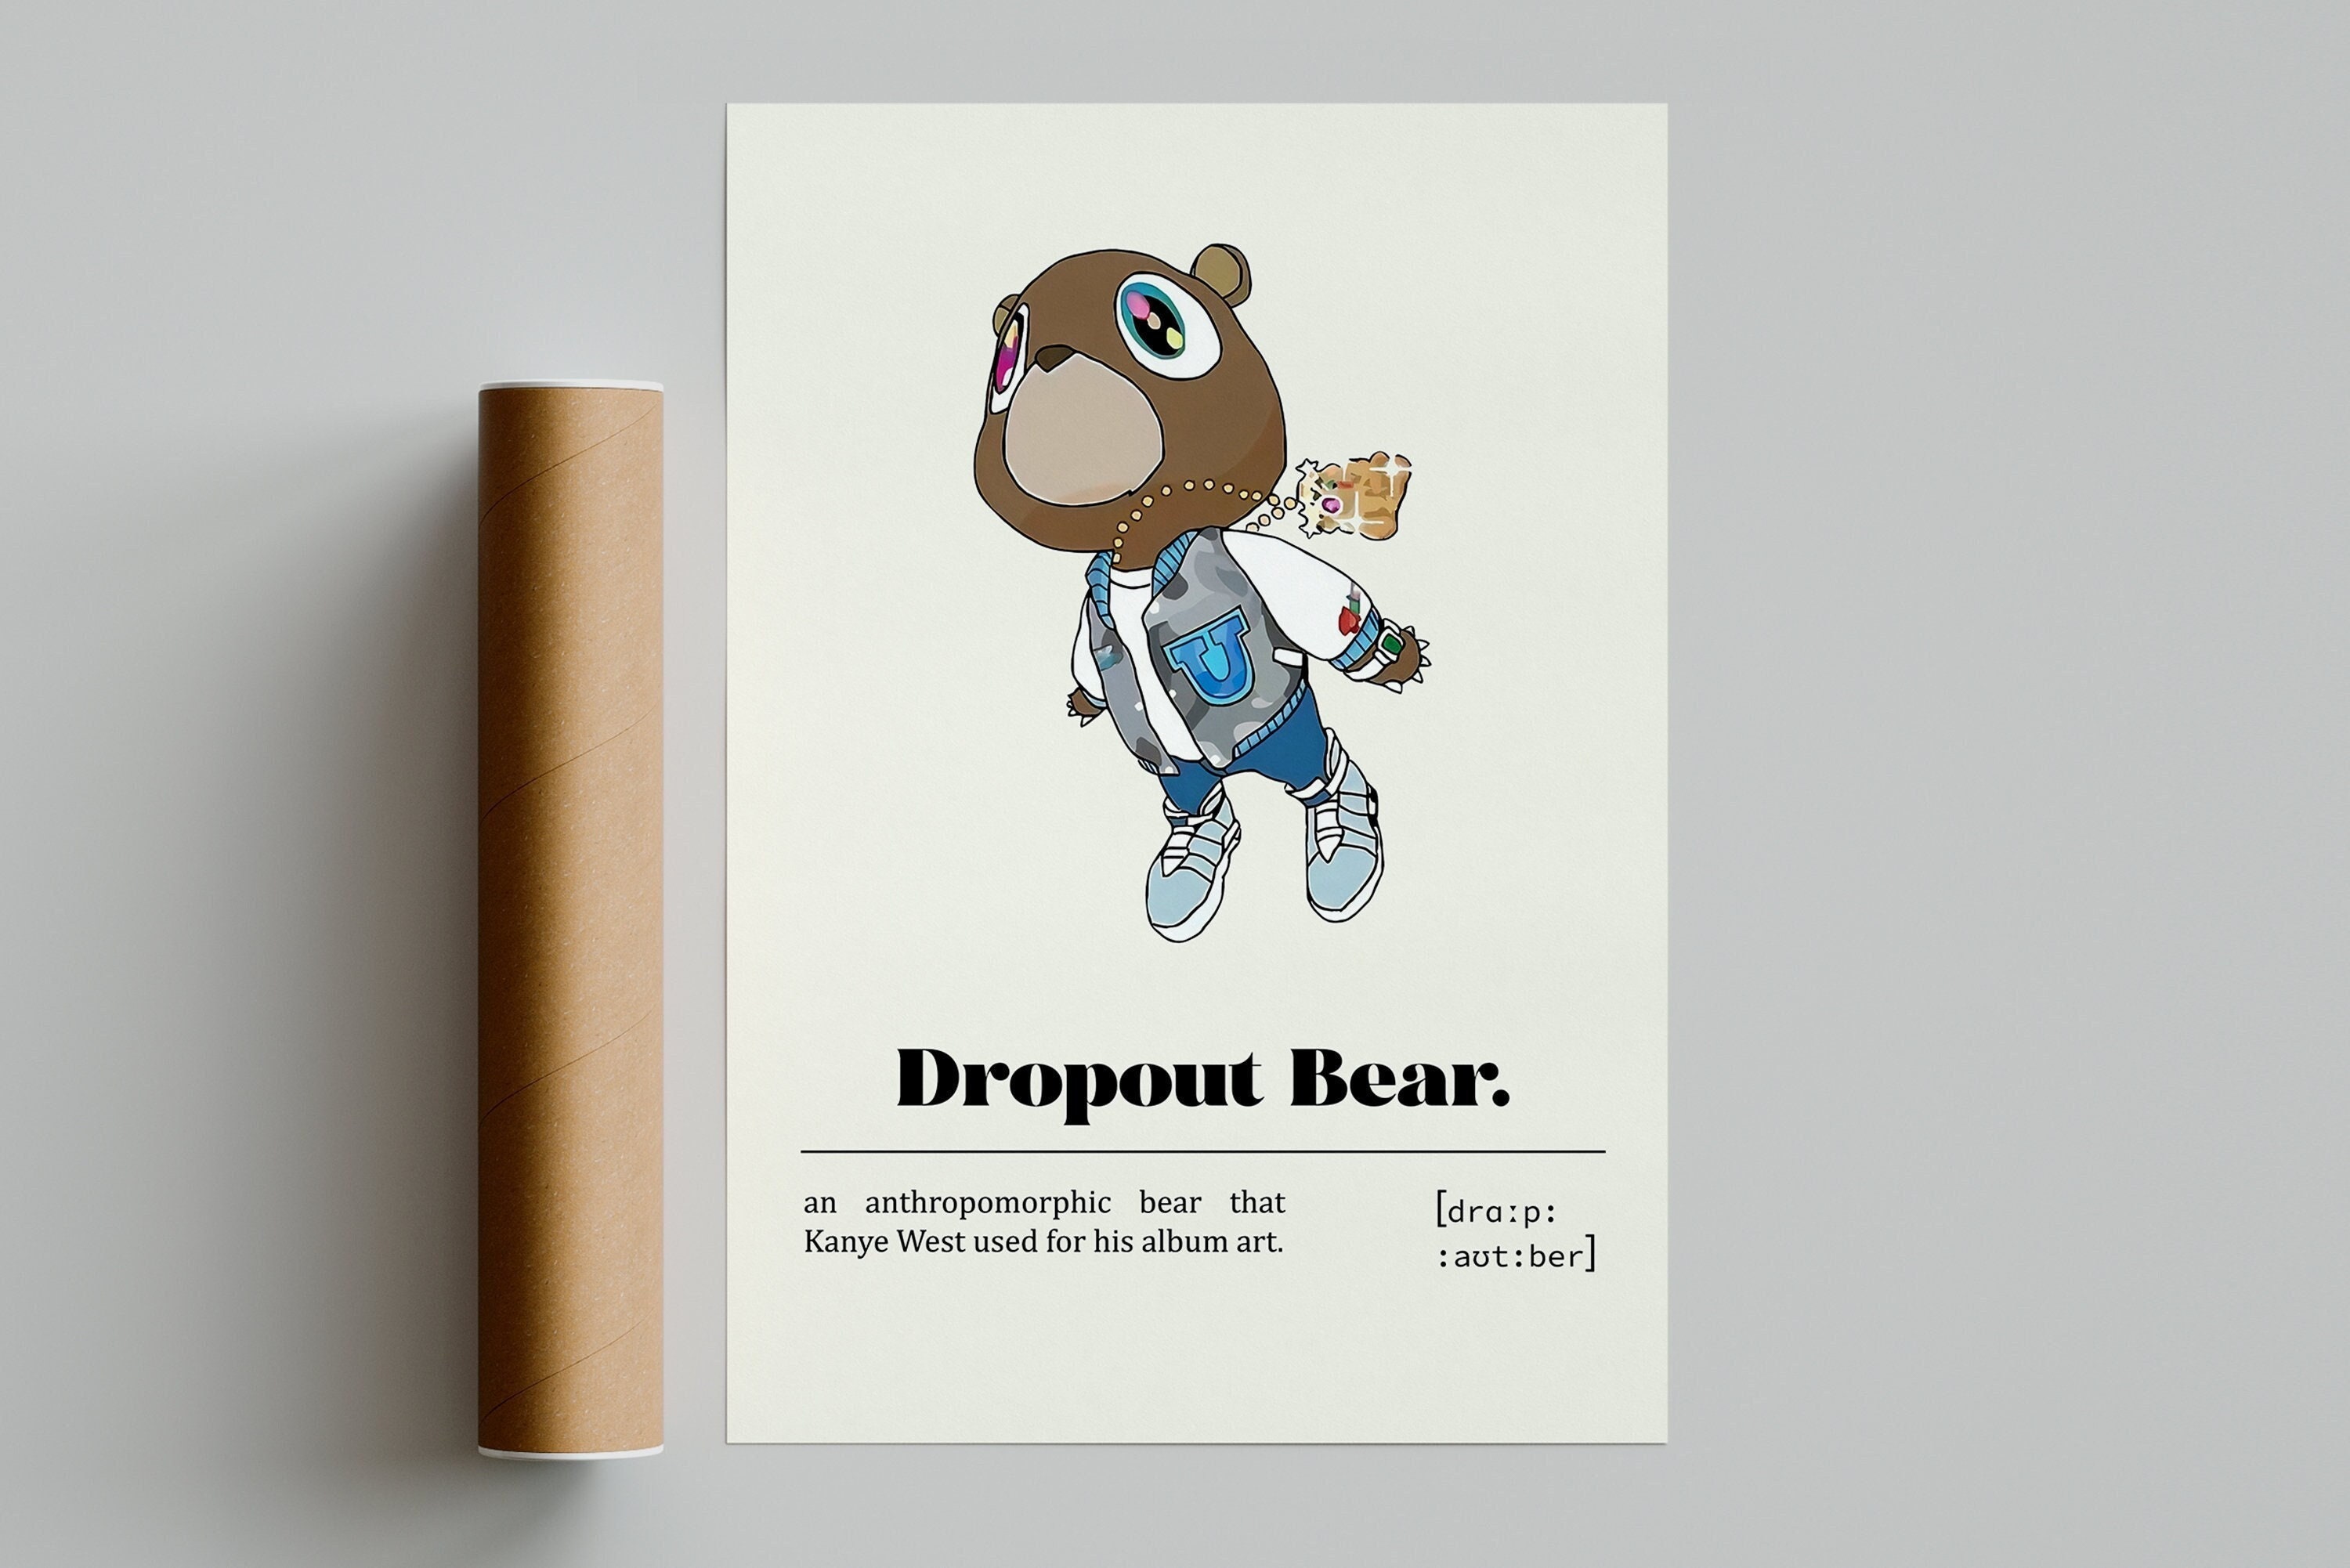 YEEZY x Dropout Bear- The Dropout Bears Take Over!